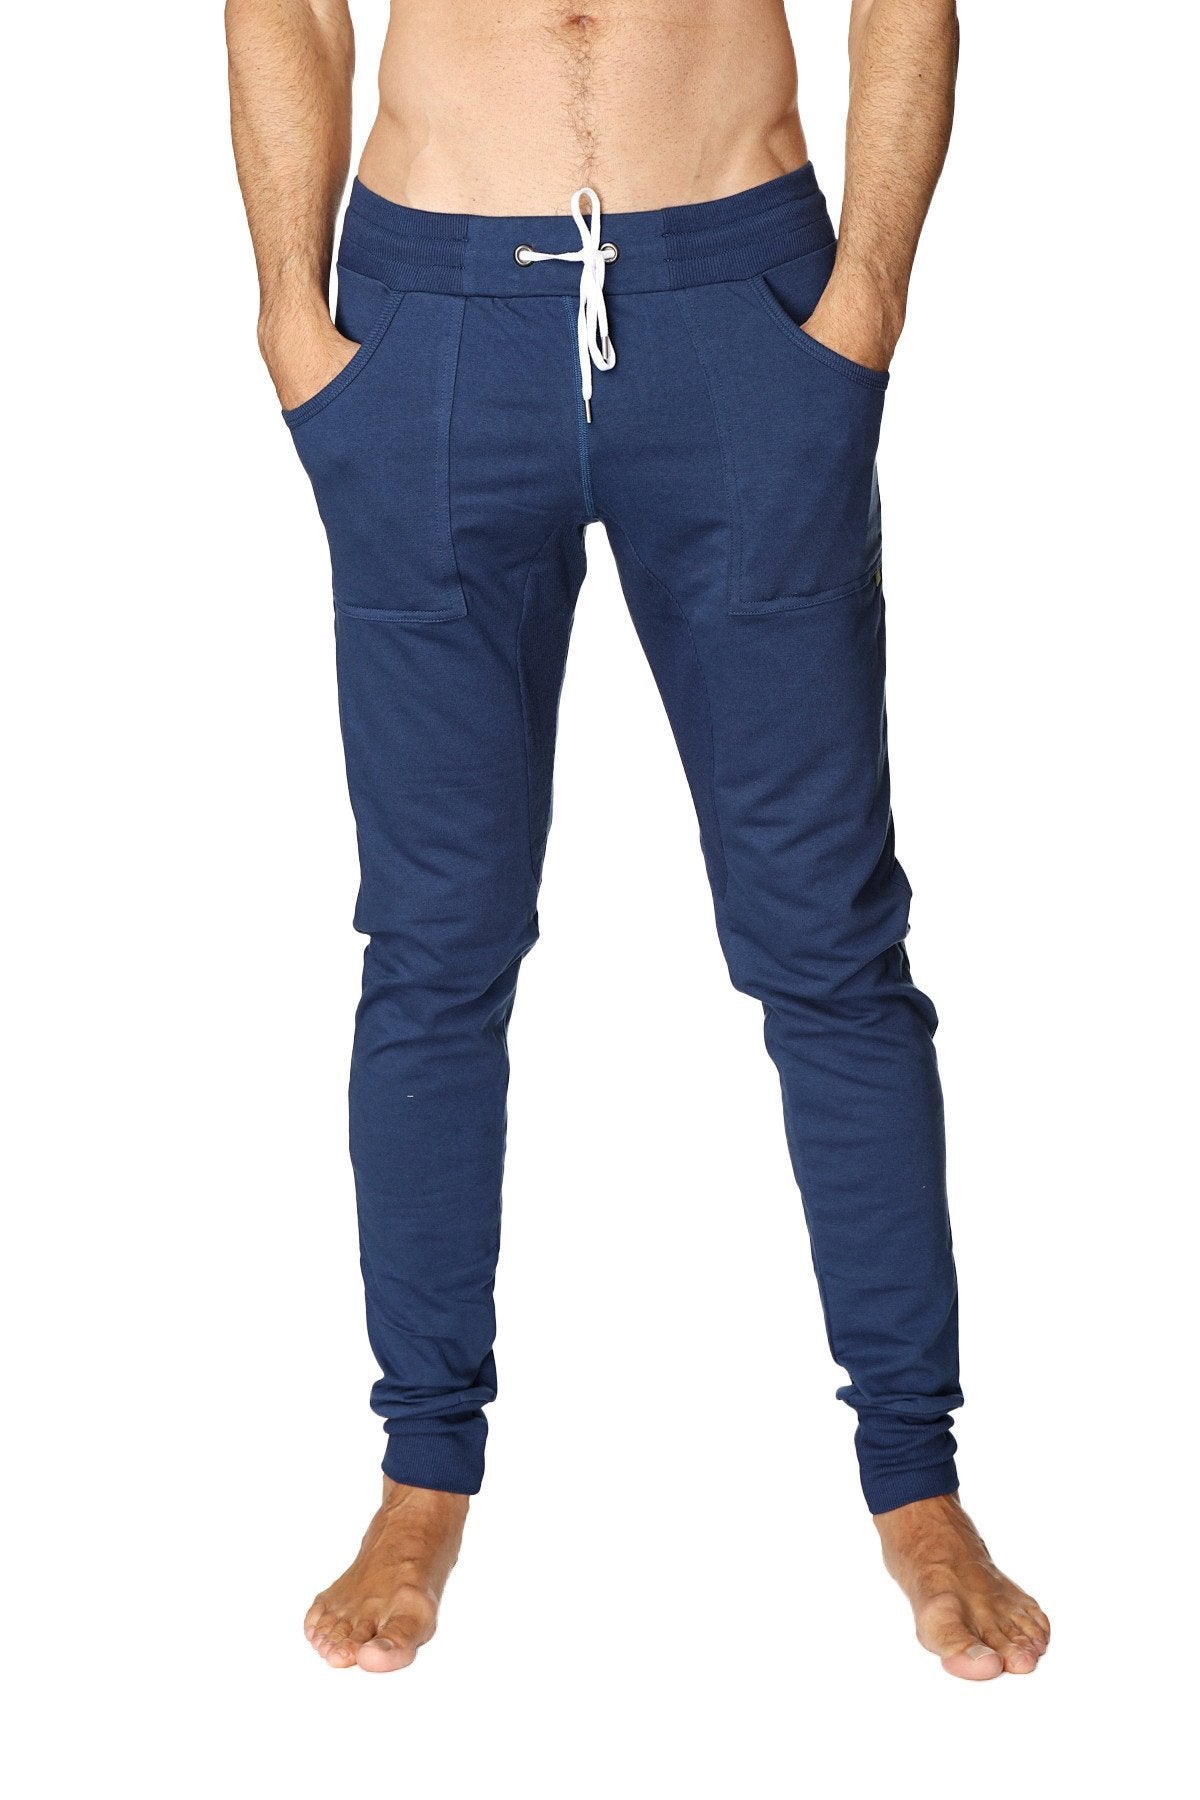 Long Cuffed Jogger Yoga Pants (Royal Blue) - 4-rth